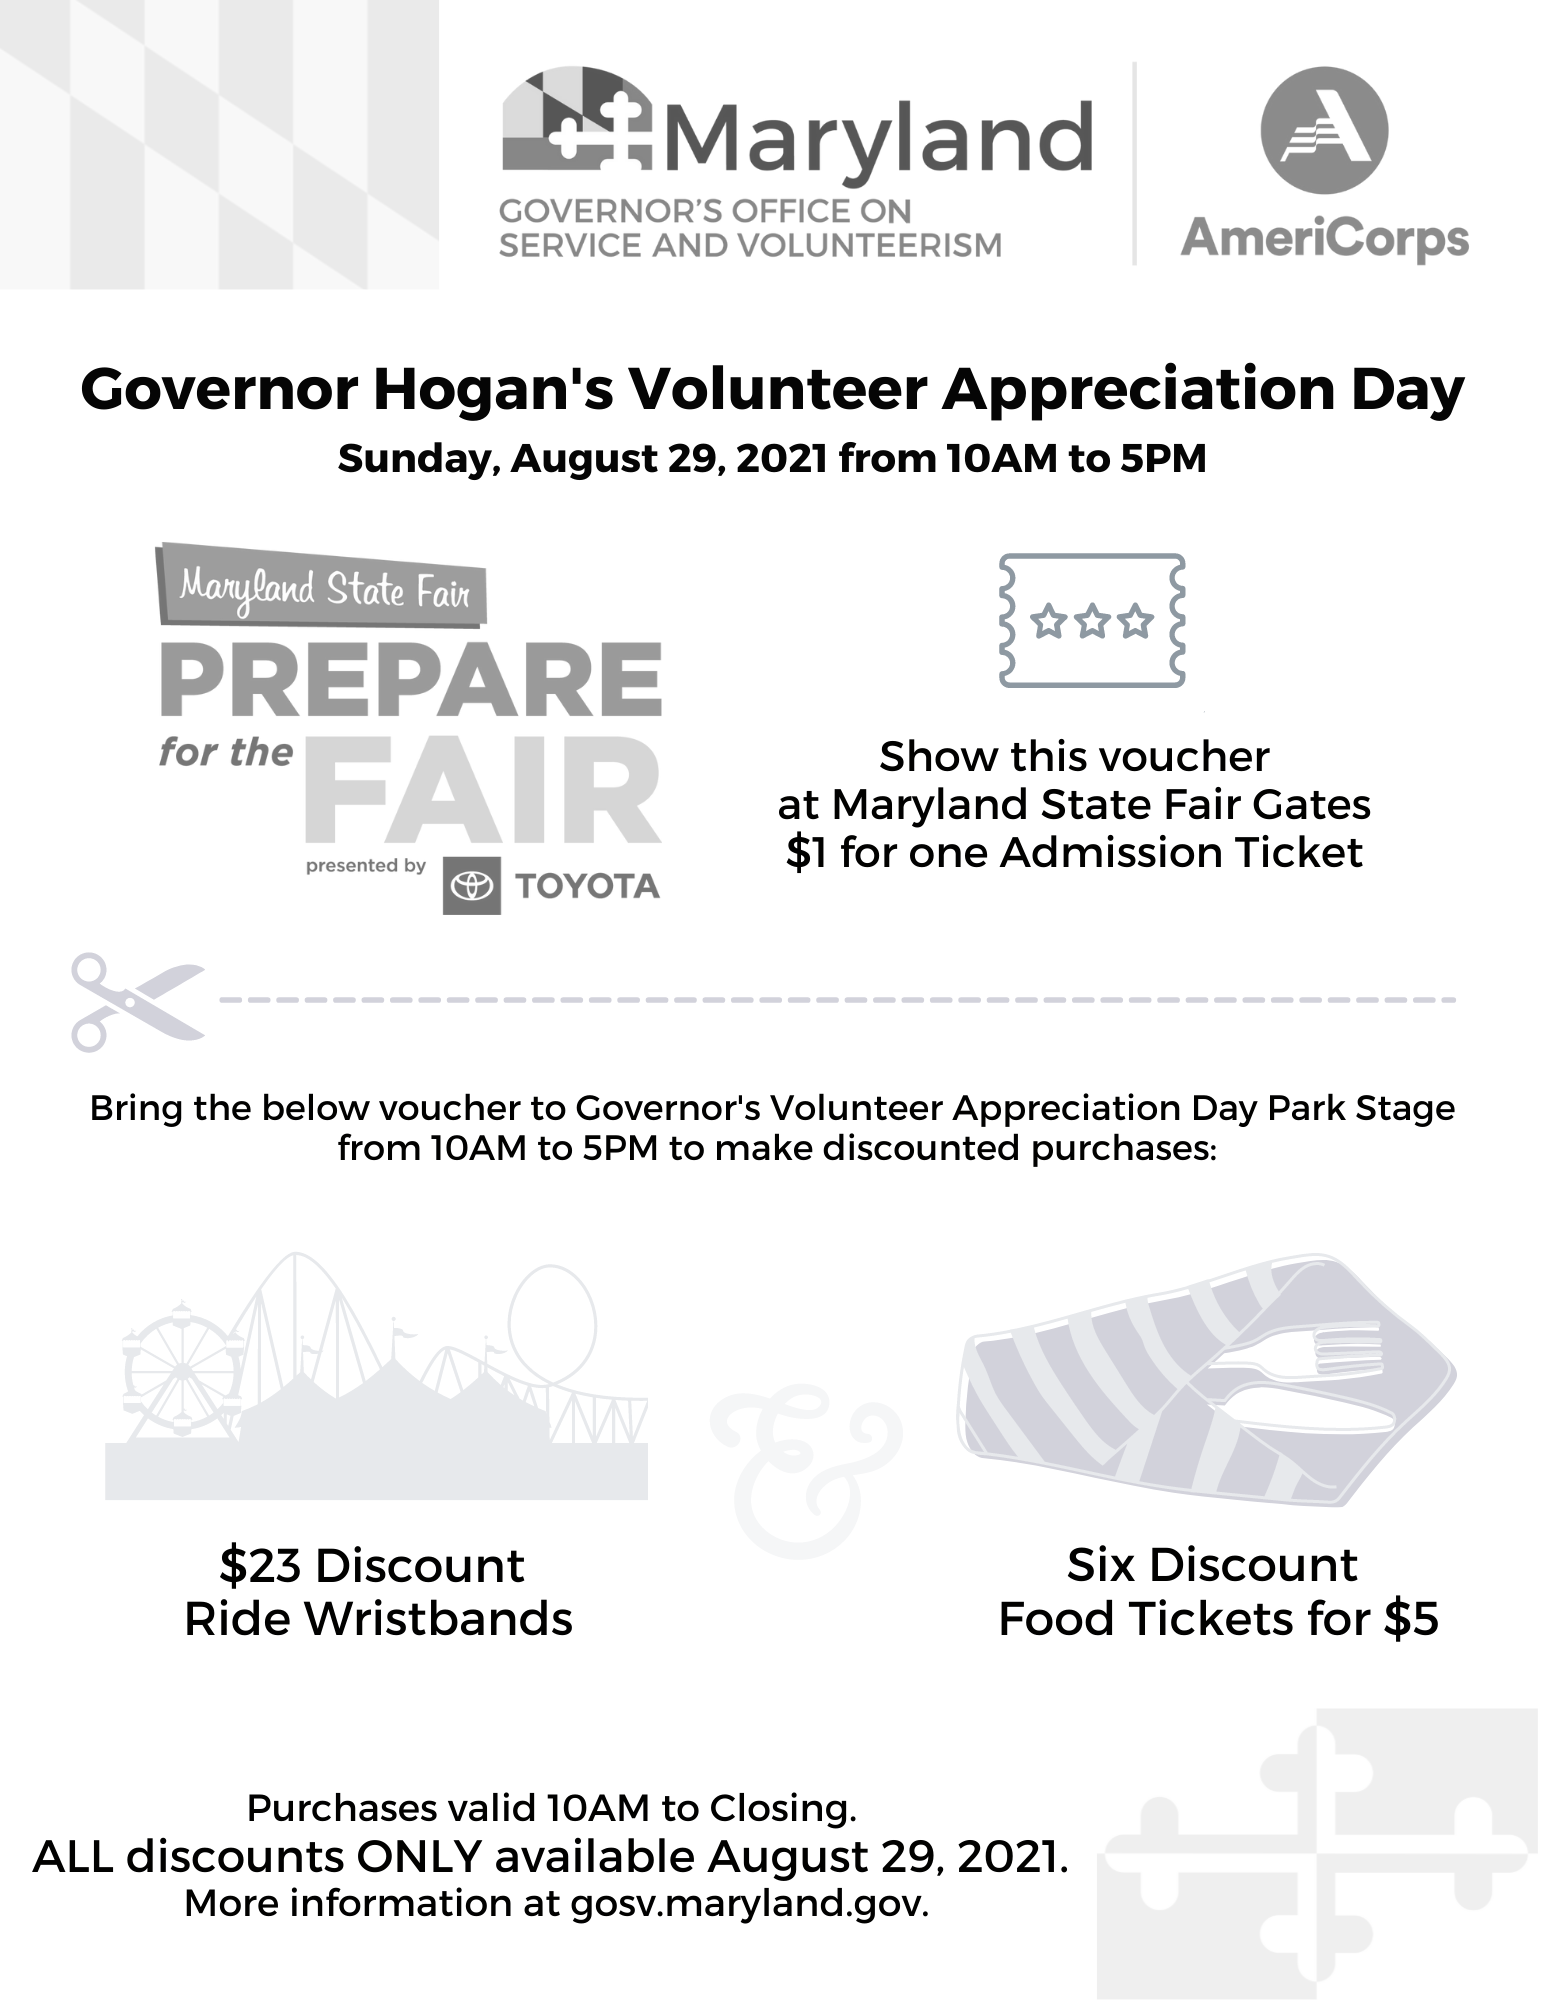 Ink-Saving (Black & White) Governor's Volunteer Appreciation Day Flyer